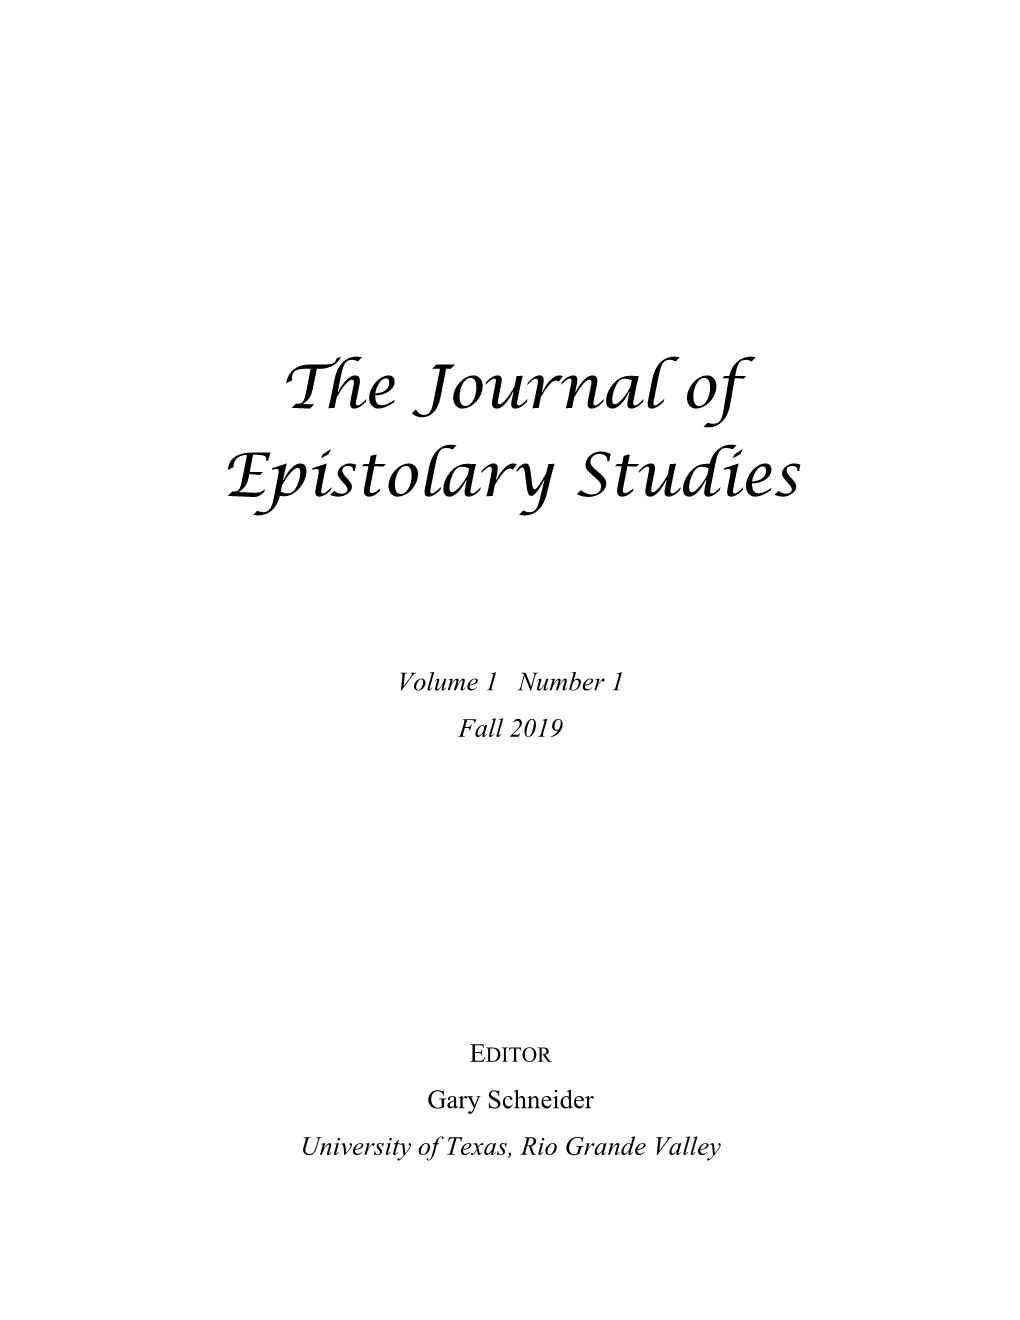 The Journal of Epistolary Studies